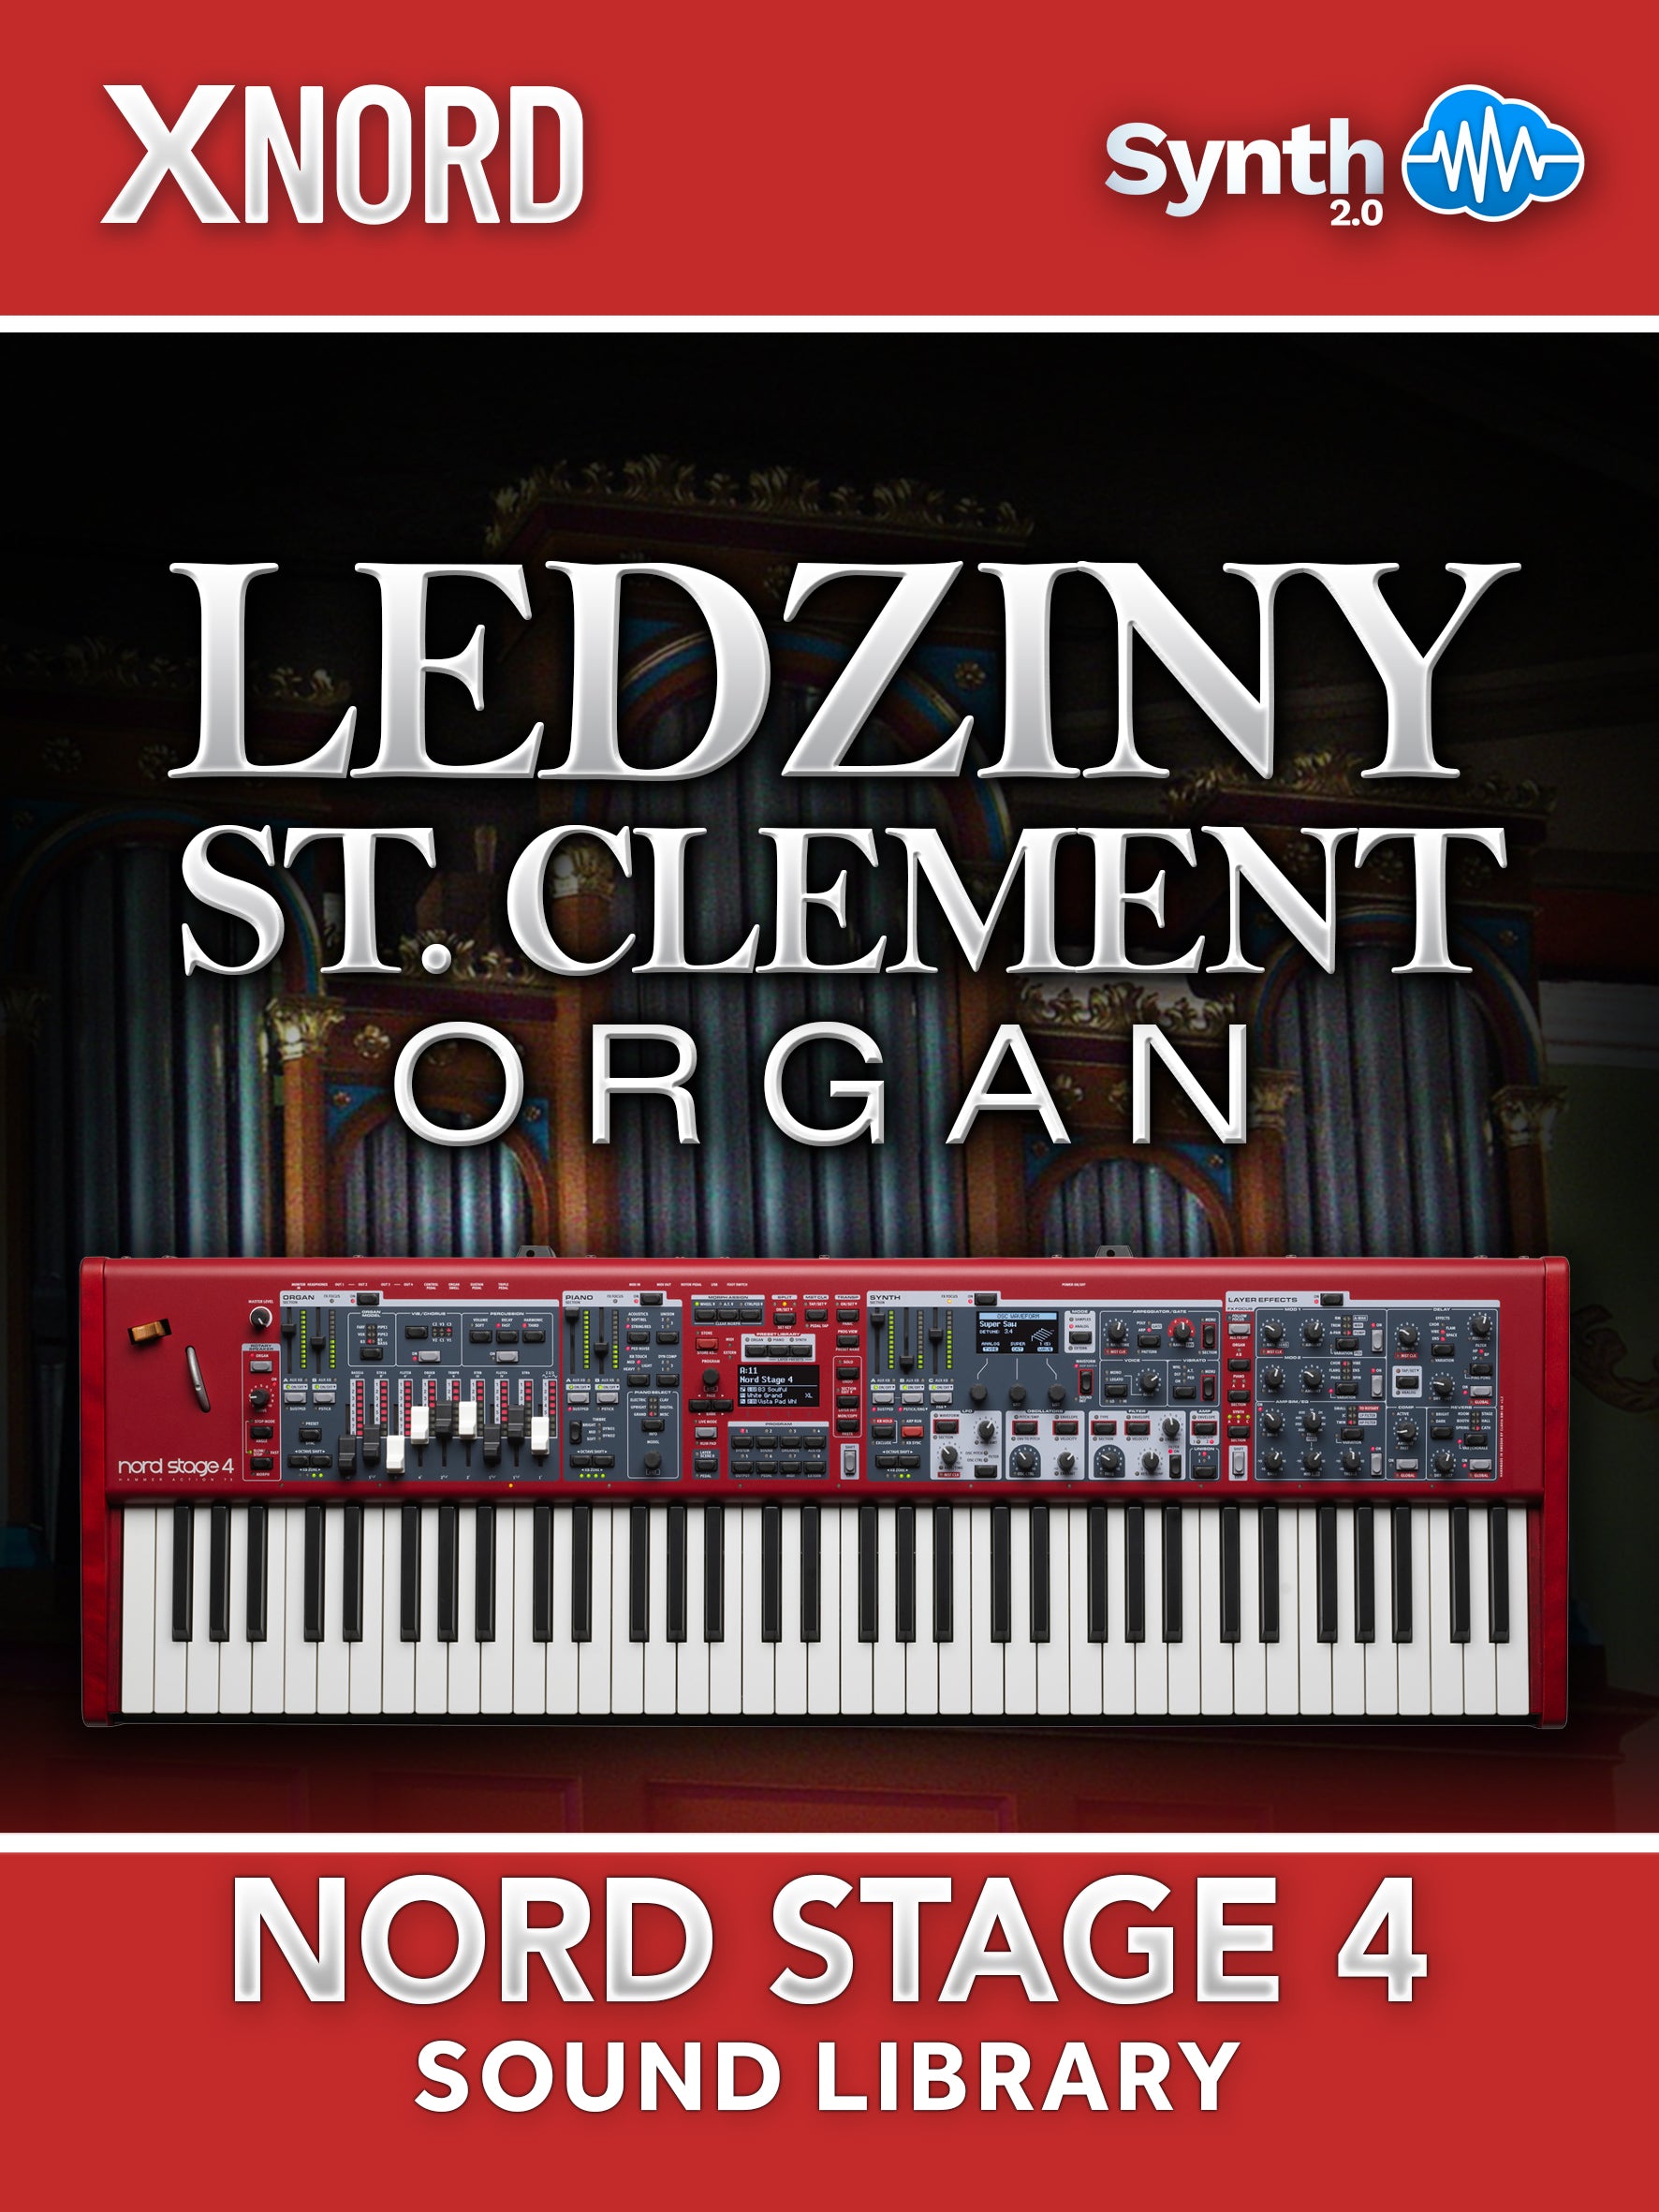 RCL014 - ( Bundle ) - Alessandria Organ + Ledziny, St. Clement Organ - Nord Stage 4